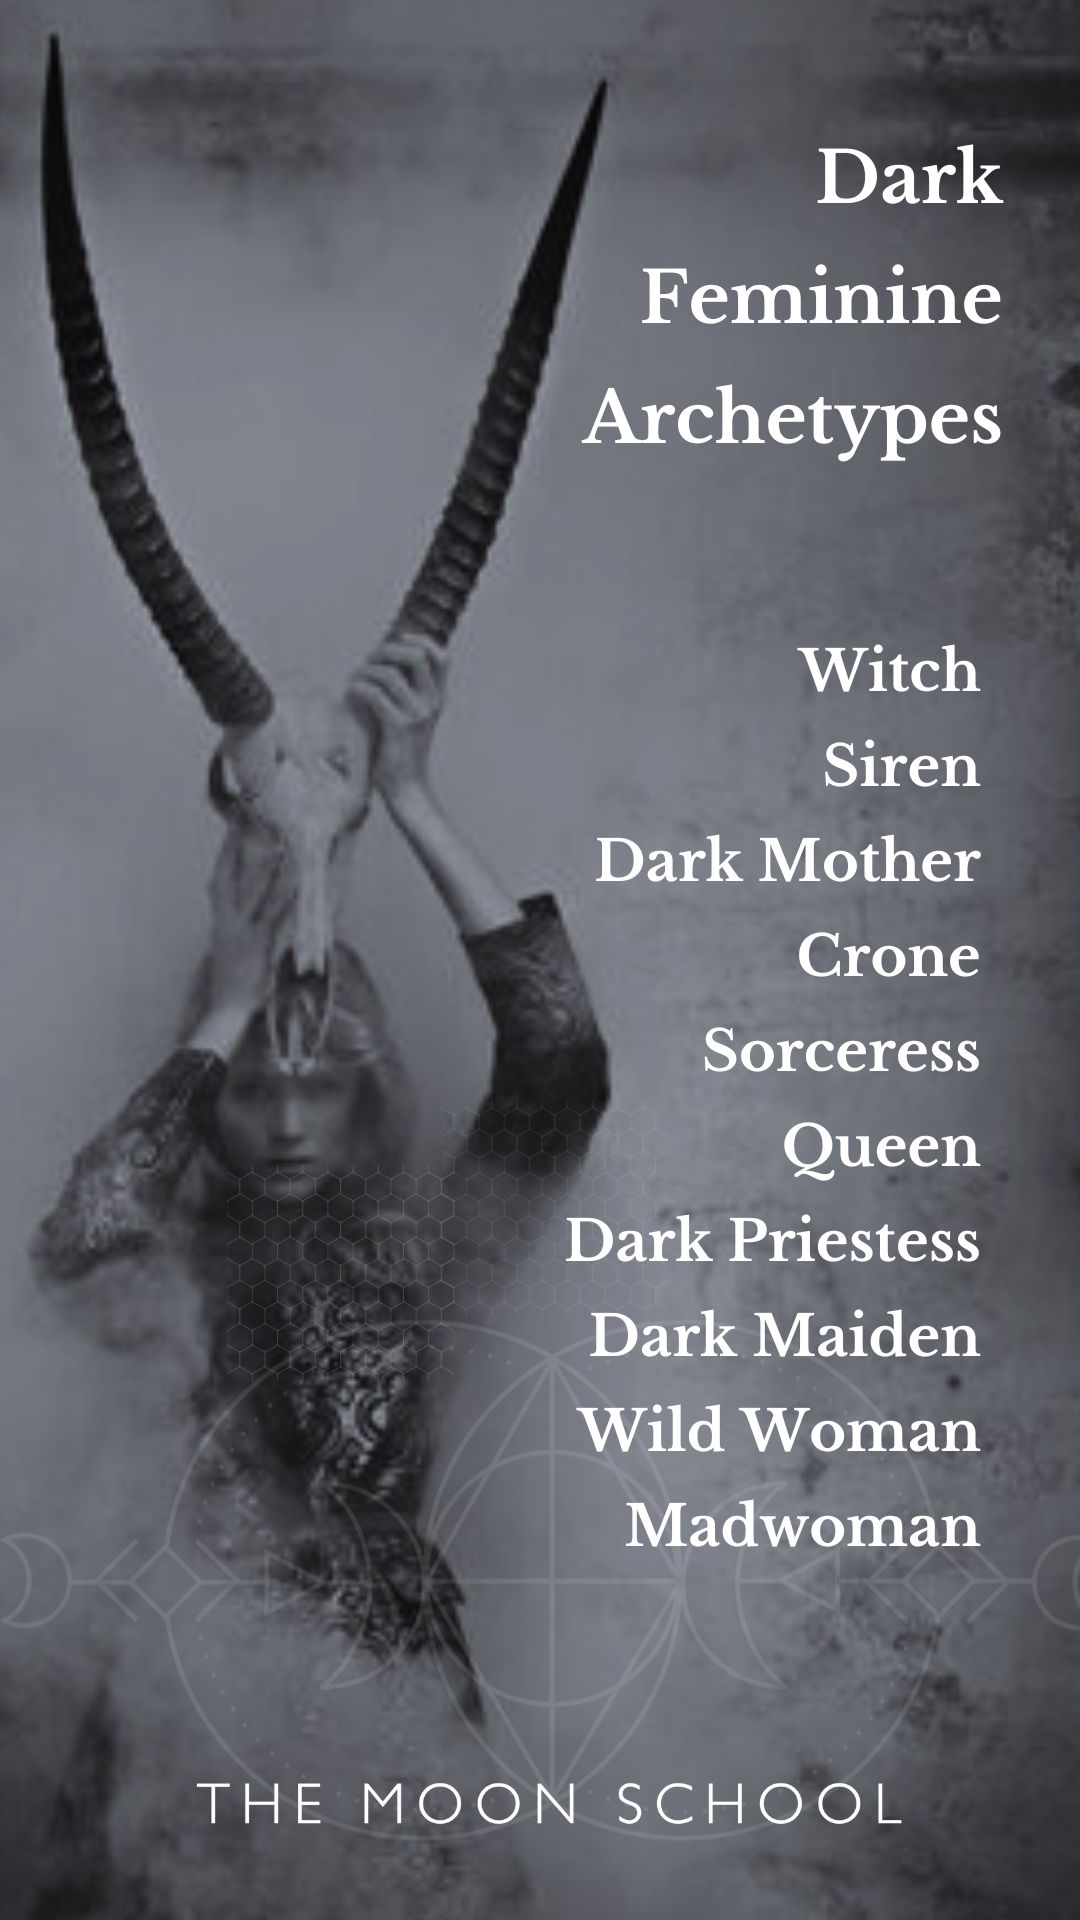 Pin of 10 dark feminine archetypes